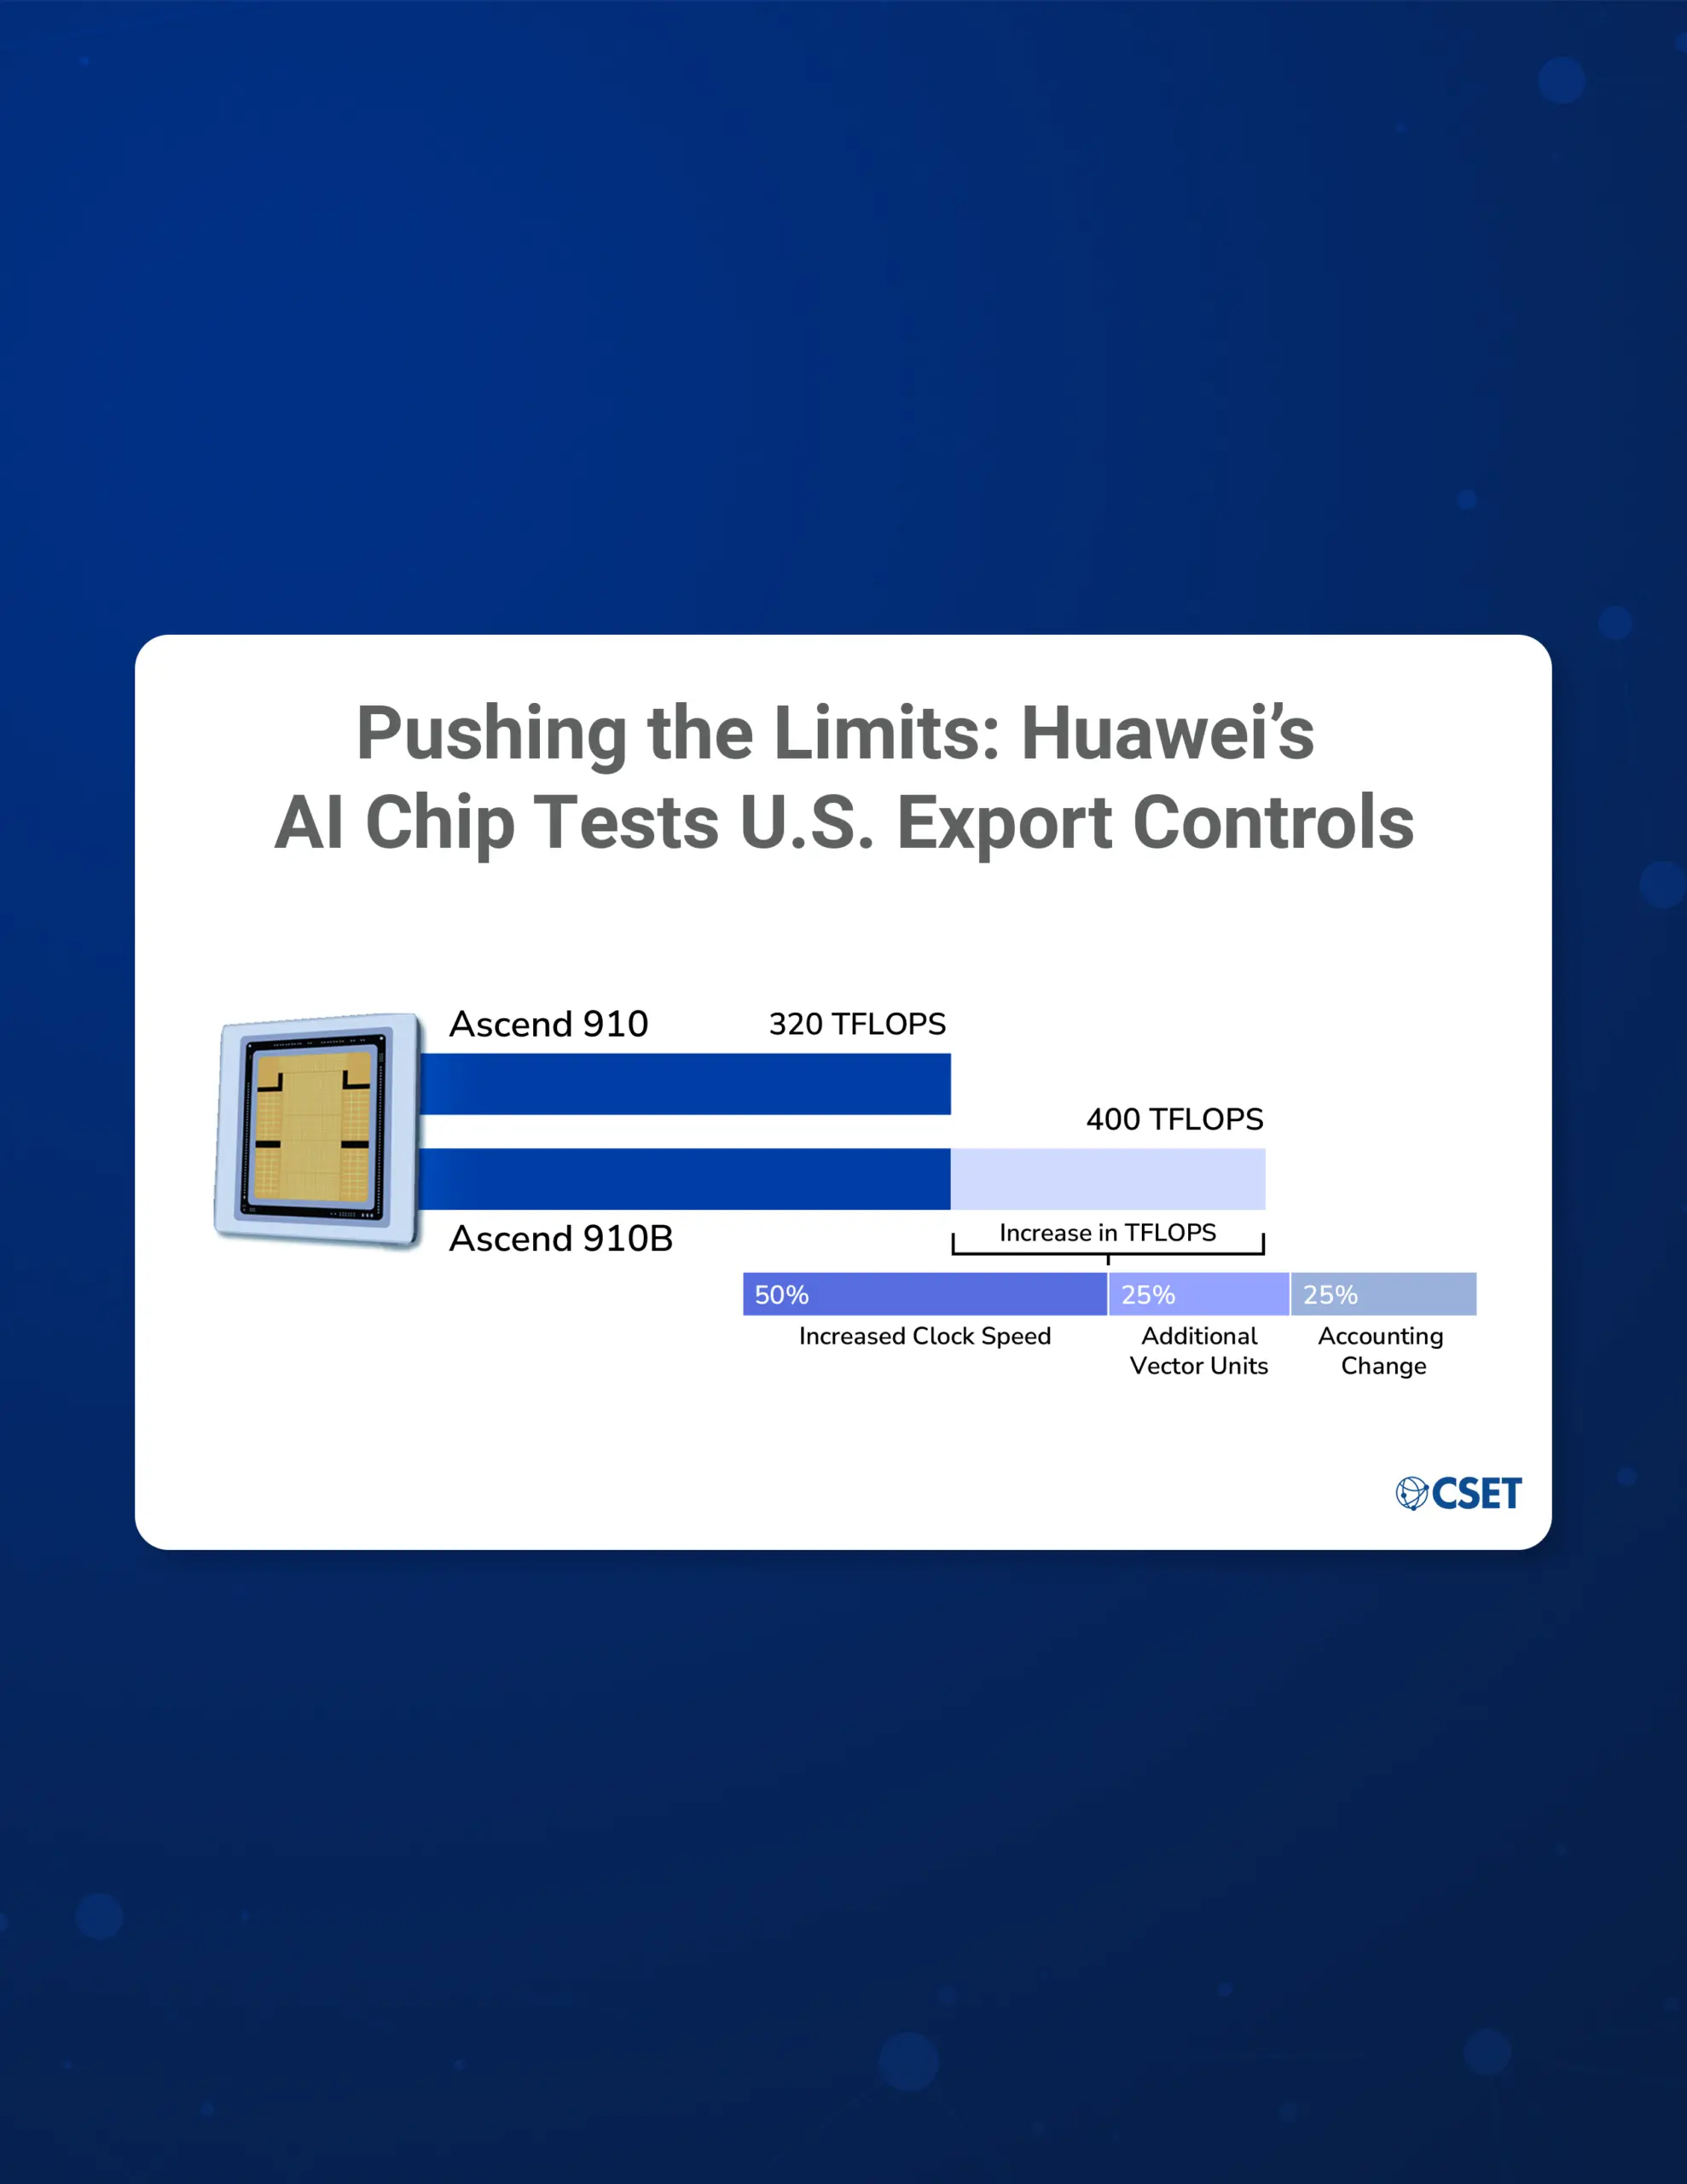 Data Snapshot - Pushing the Limits: Huawei’s AI Chip Tests U.S. Export Controls